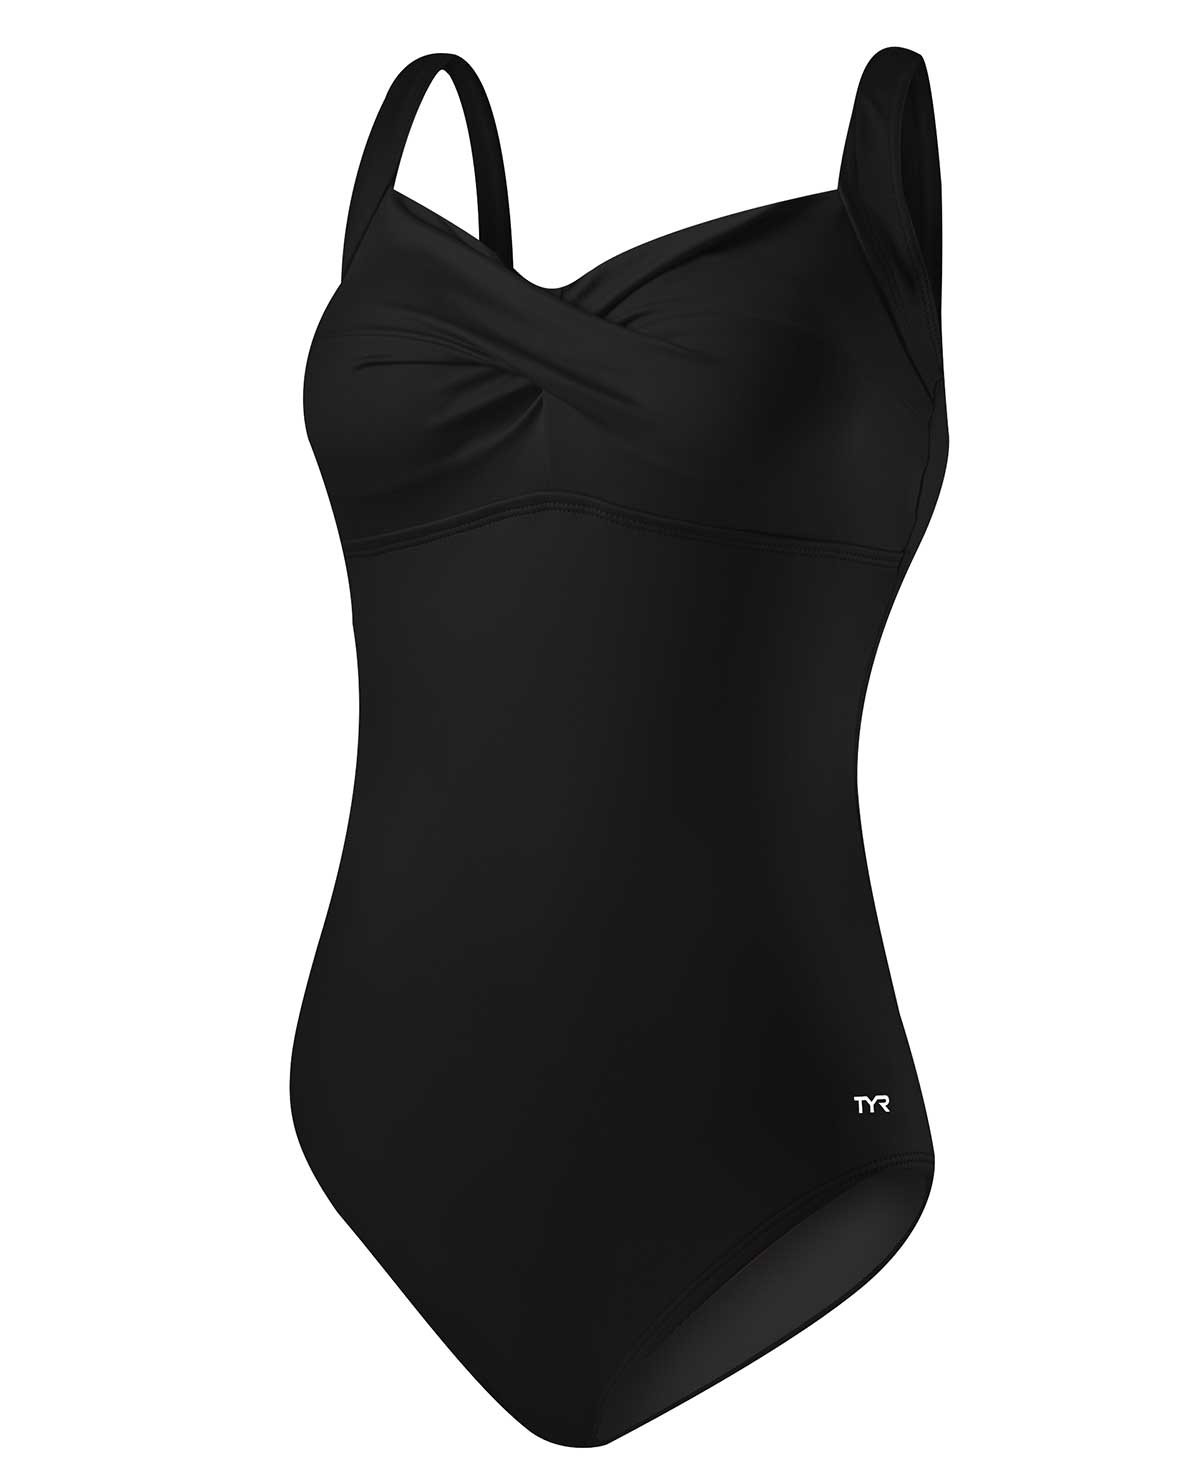 https://www.breizh-rider.fr/34362/tyr-solid-twisted-bra-womens-one-piece-swimsuit-controlfit-black.jpg